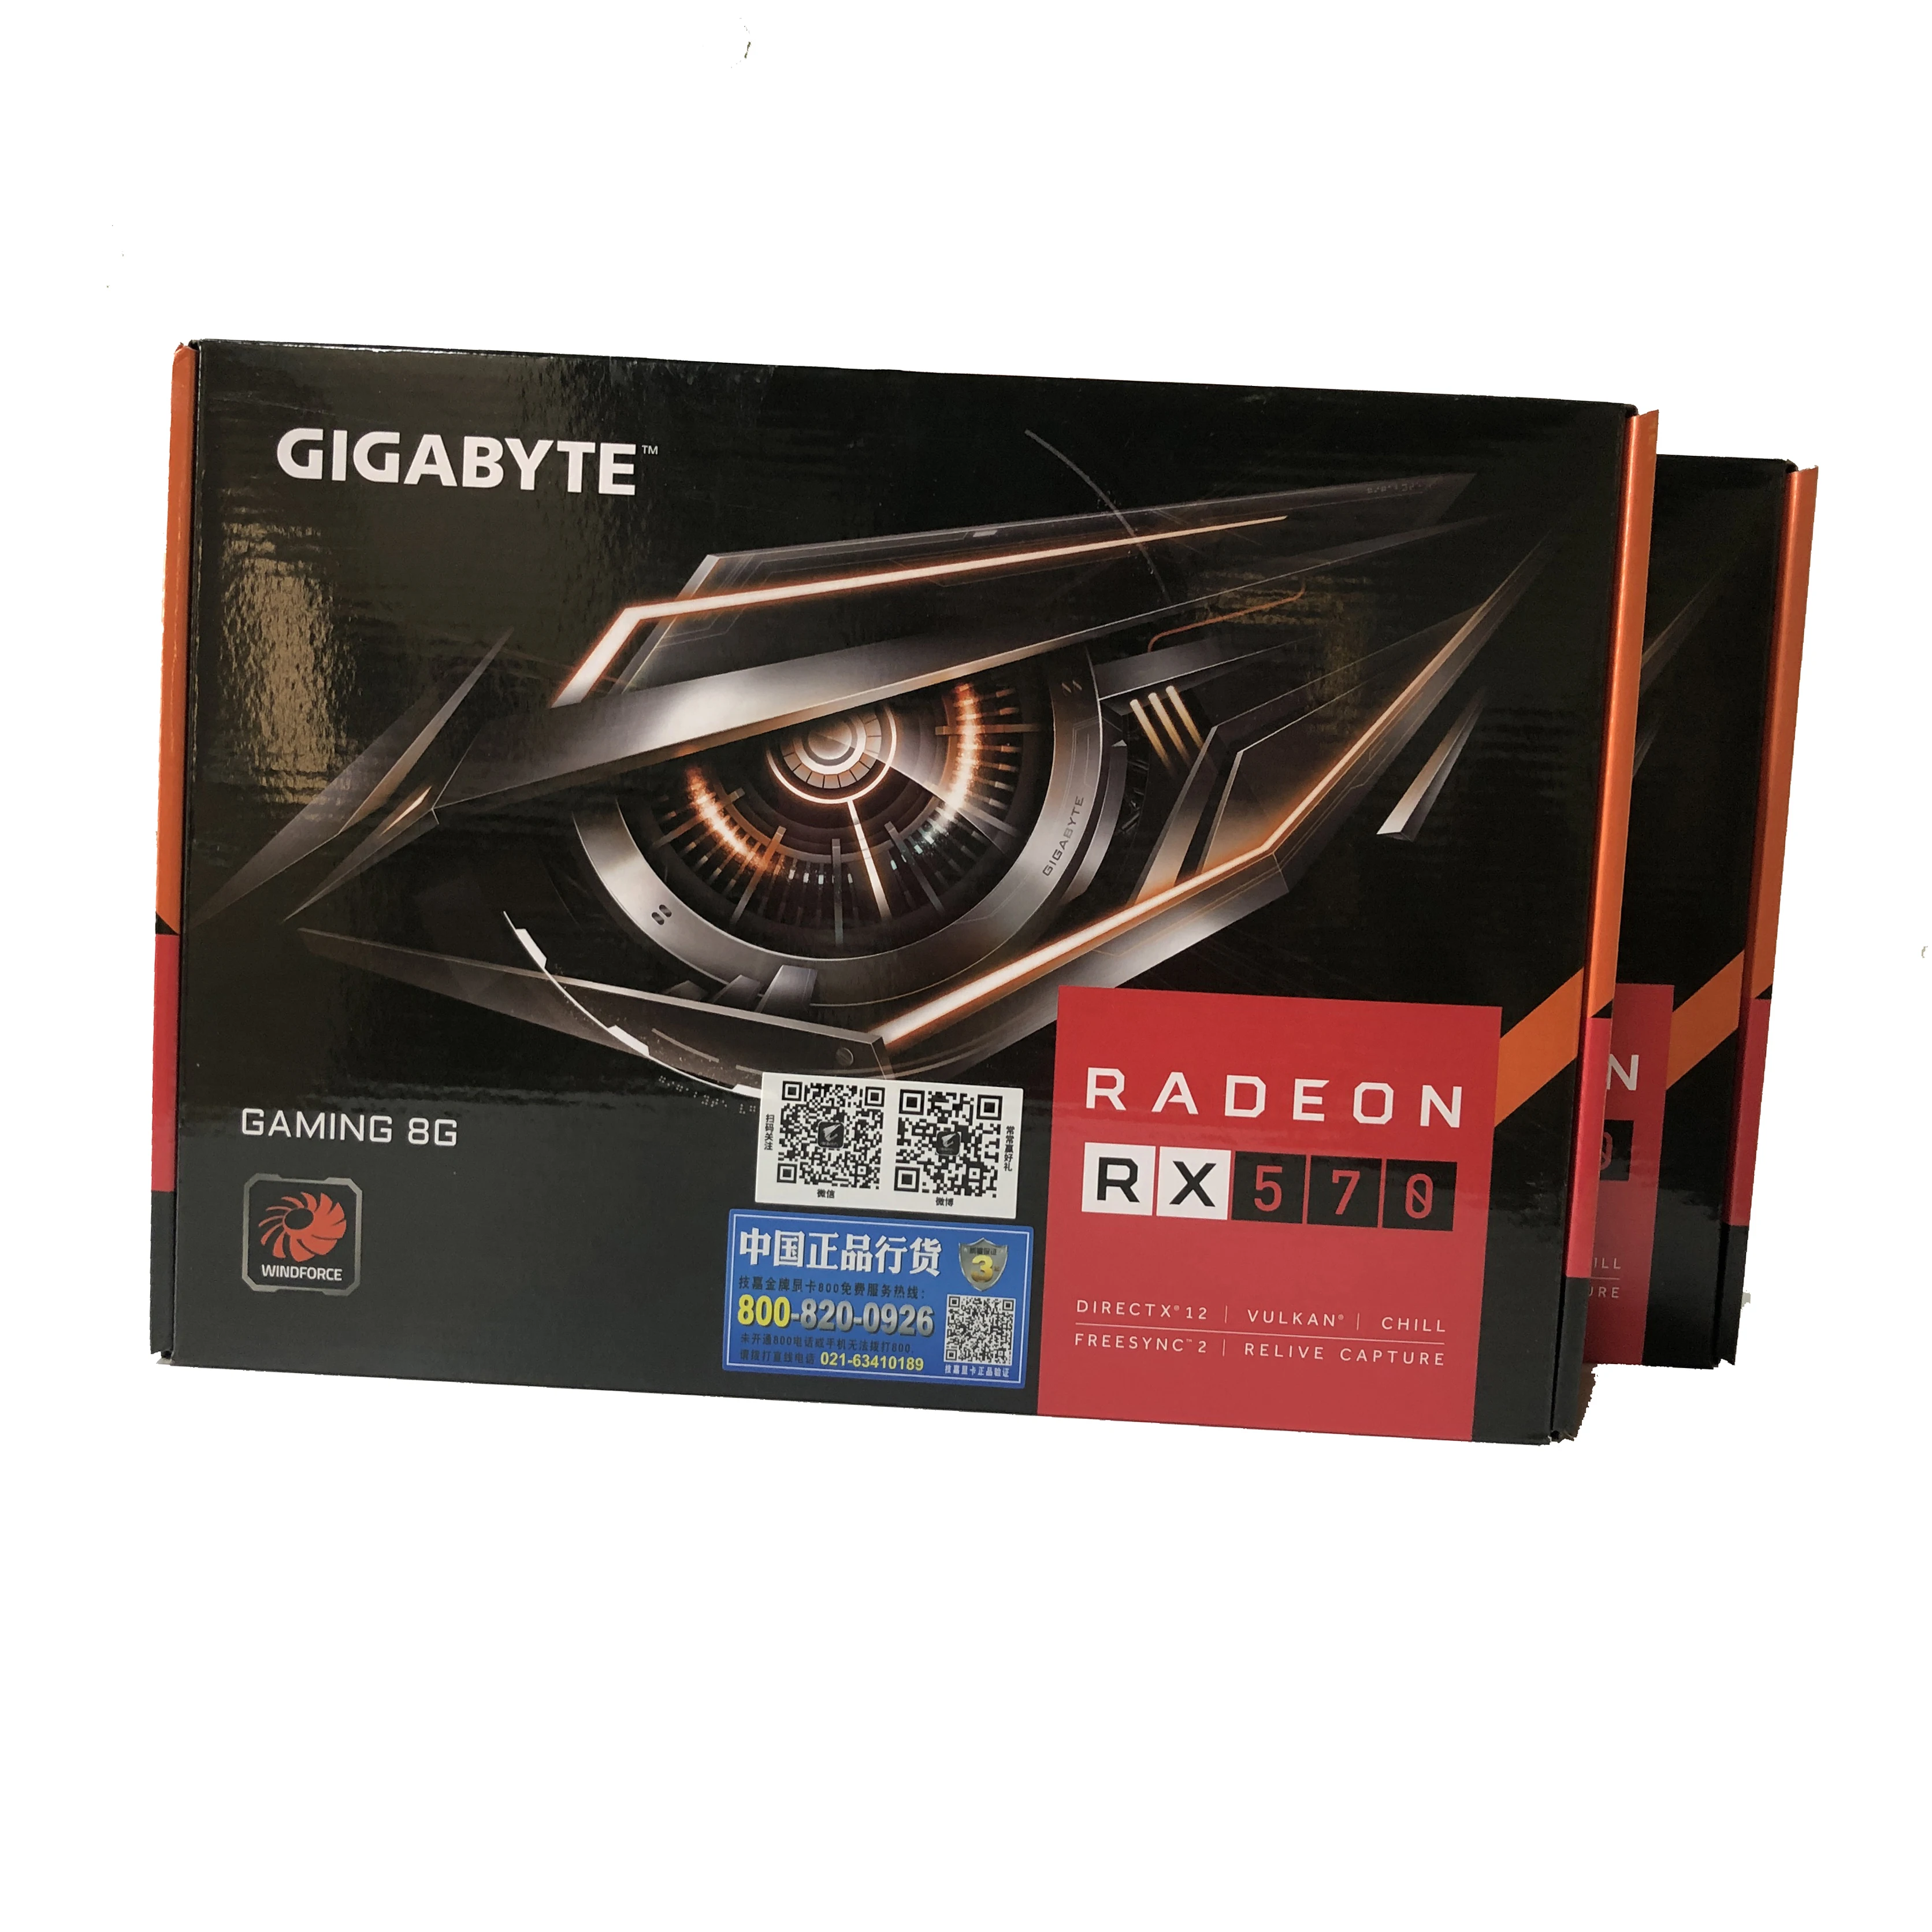 Gigabyte AMD RX 570 8gb. Gigabyte AMD Radeon RX 570 Gaming 4gb. Don't Touch 8gb RX 570. Turbina RX 570 8gb dont Touch.